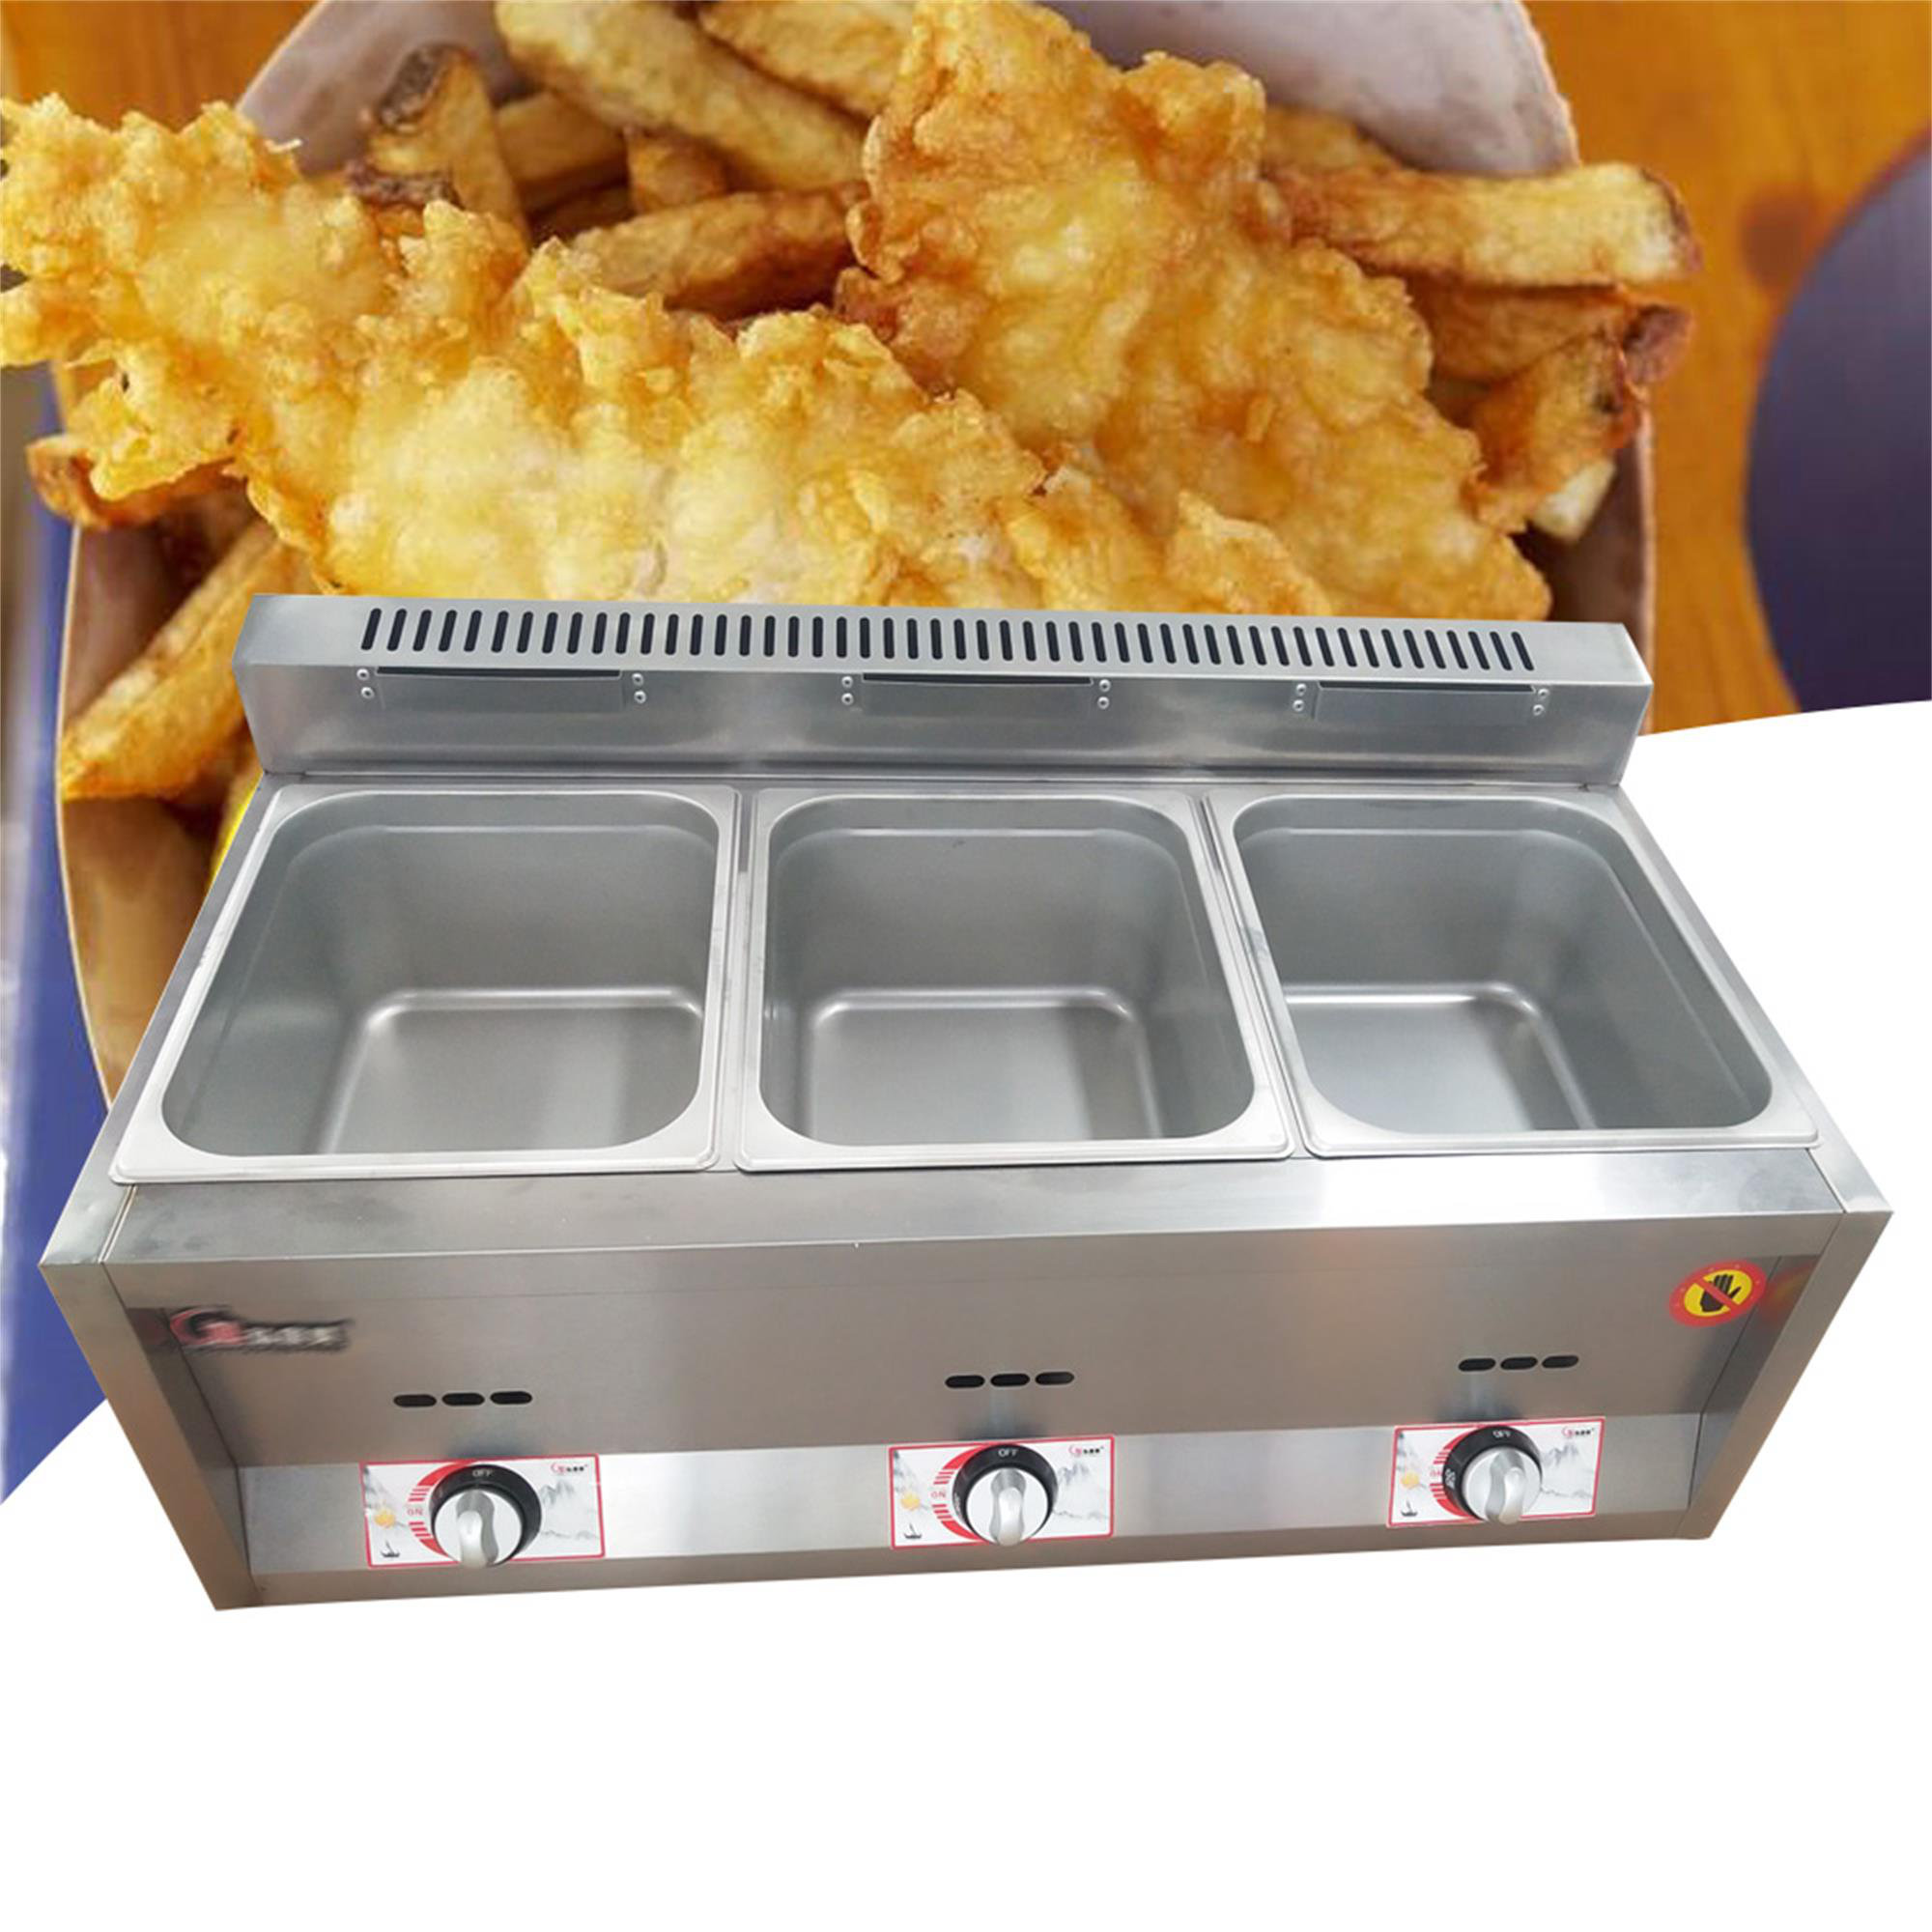 VEVOR Commercial Electric Food Warmer 3-Pot Steam Table Food